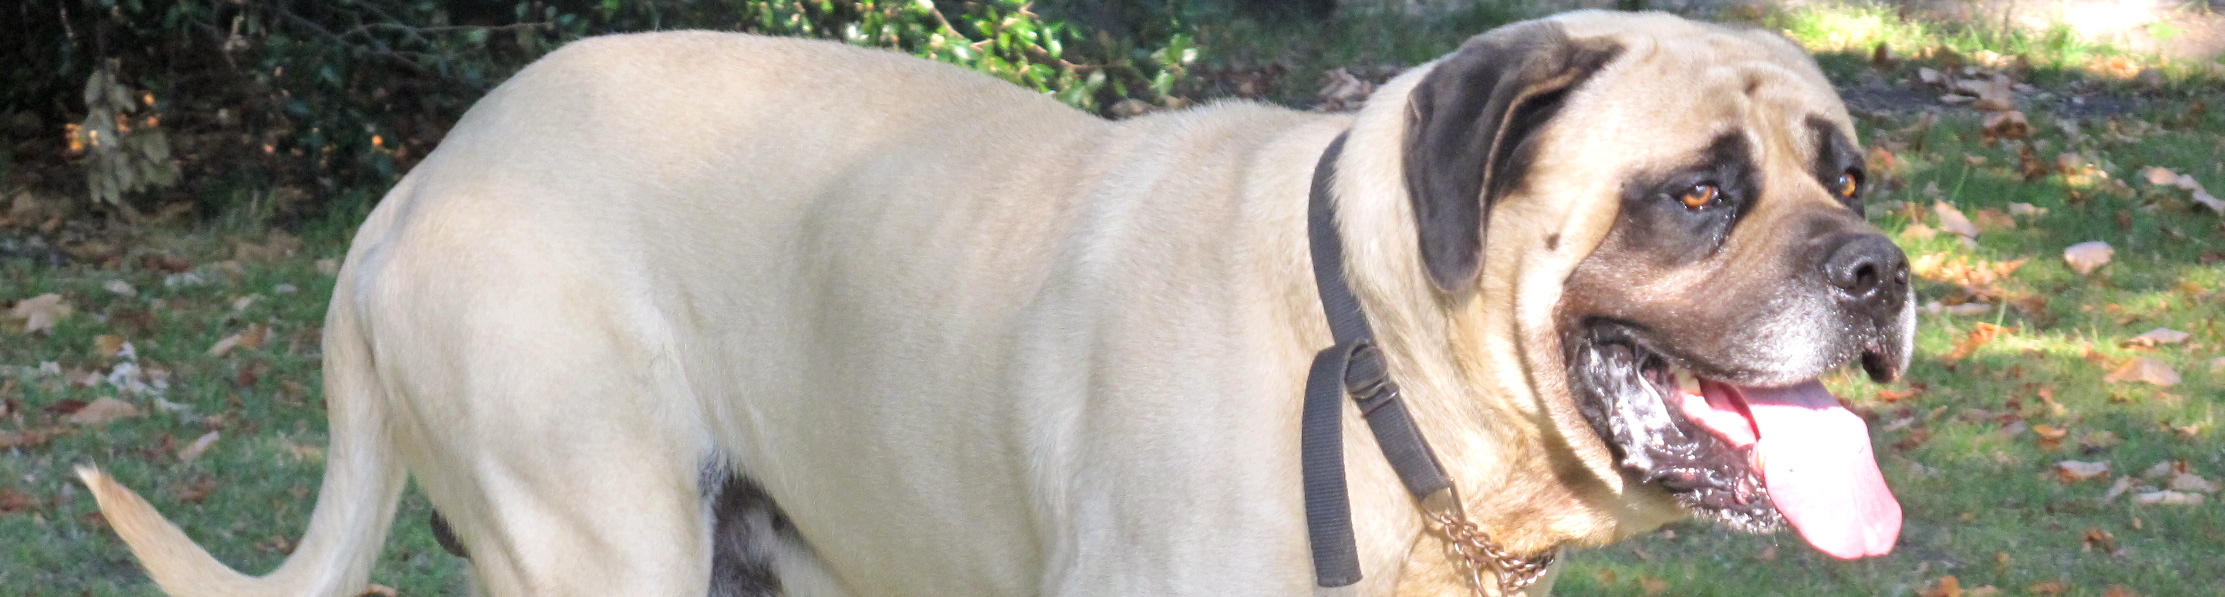 Mastiff Health - Dog Breeds at NewPetOwners